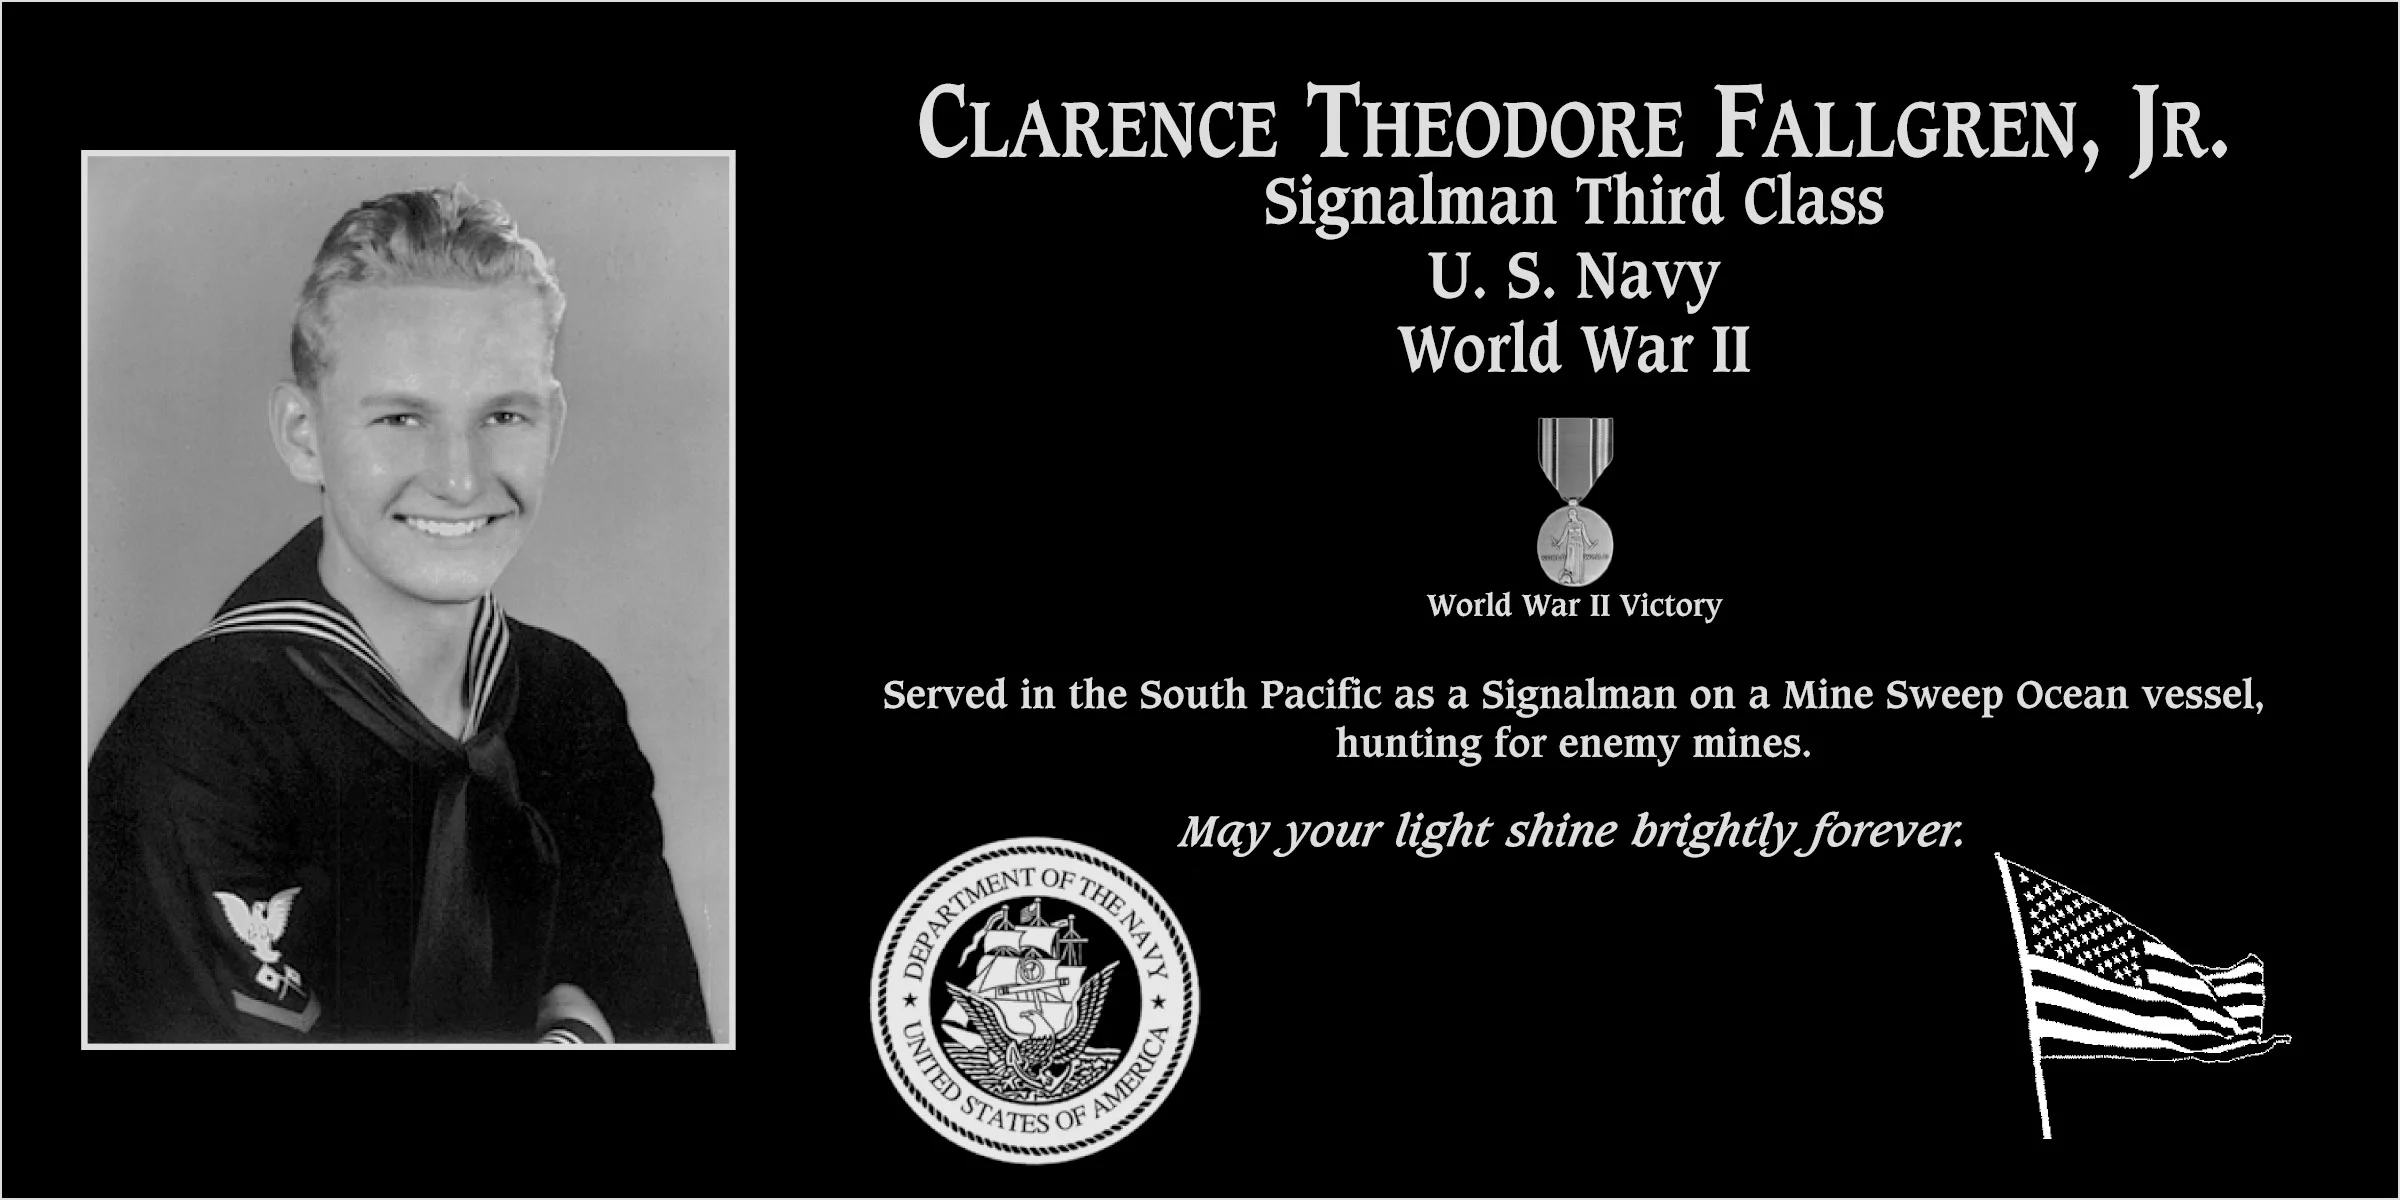 Clrence Theodore Fallgren, jr